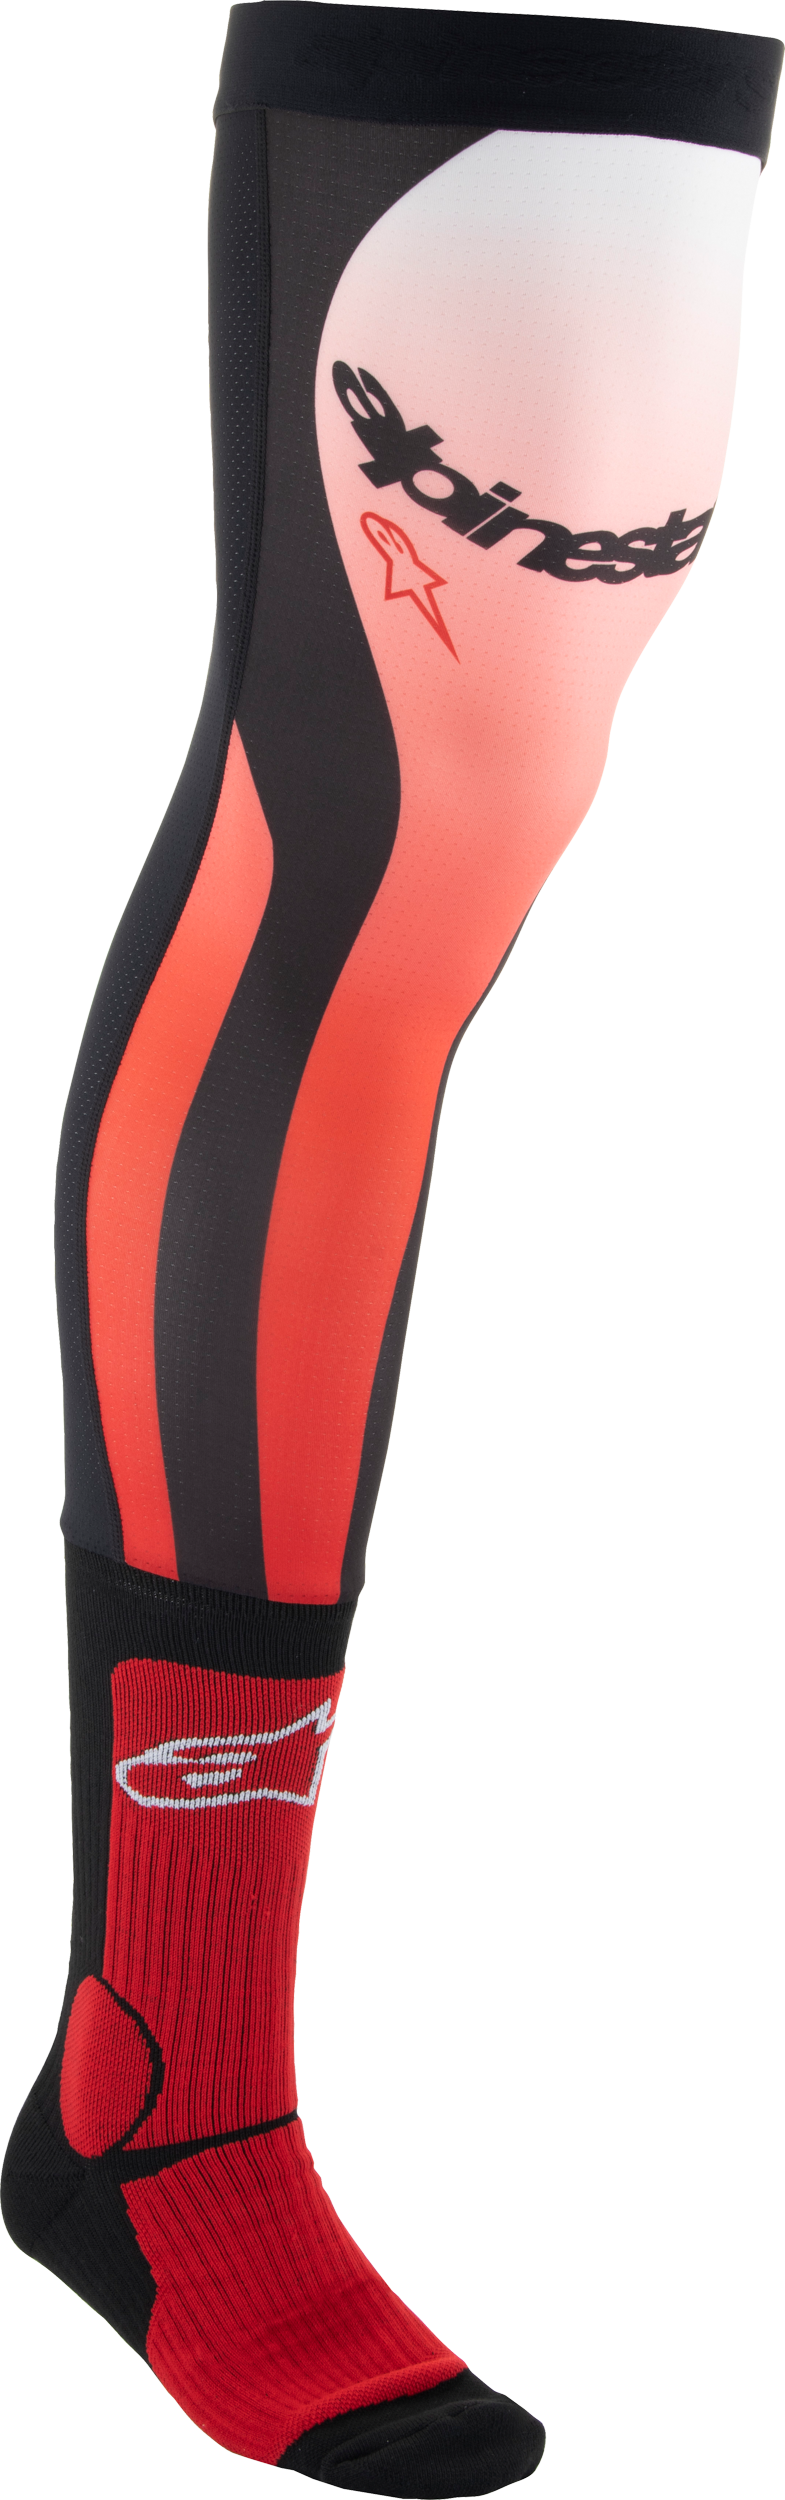 ALPINESTARS Knee Brace Socks Bright Red/White Sm/Md 4701324-3012-S/M